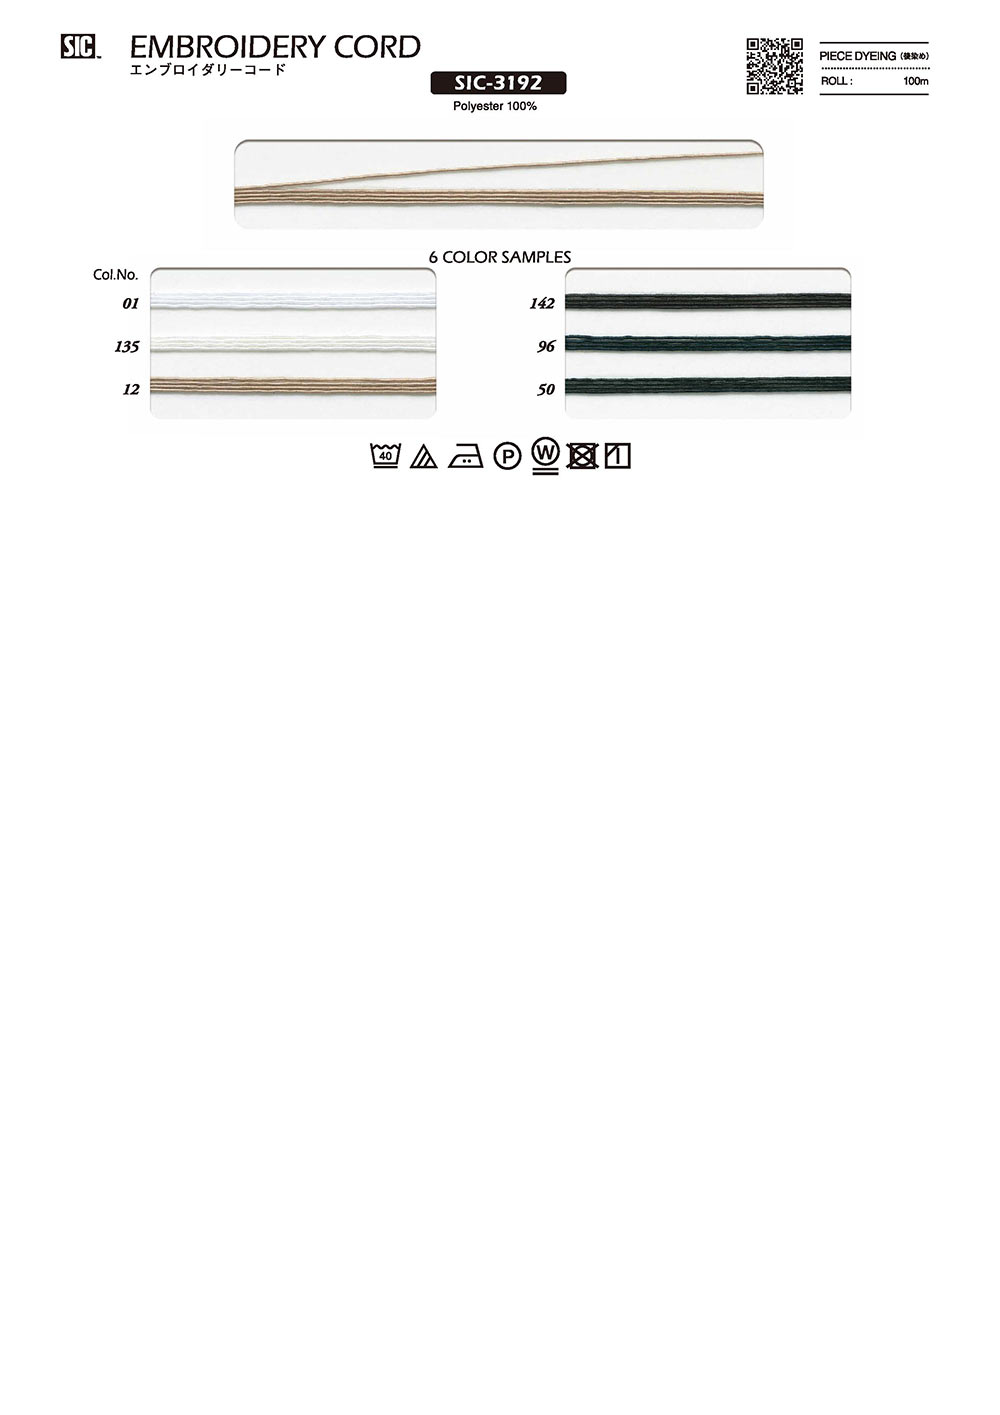 SIC-3192 Embroidery Cord[Ribbon Tape Cord] SHINDO(SIC)